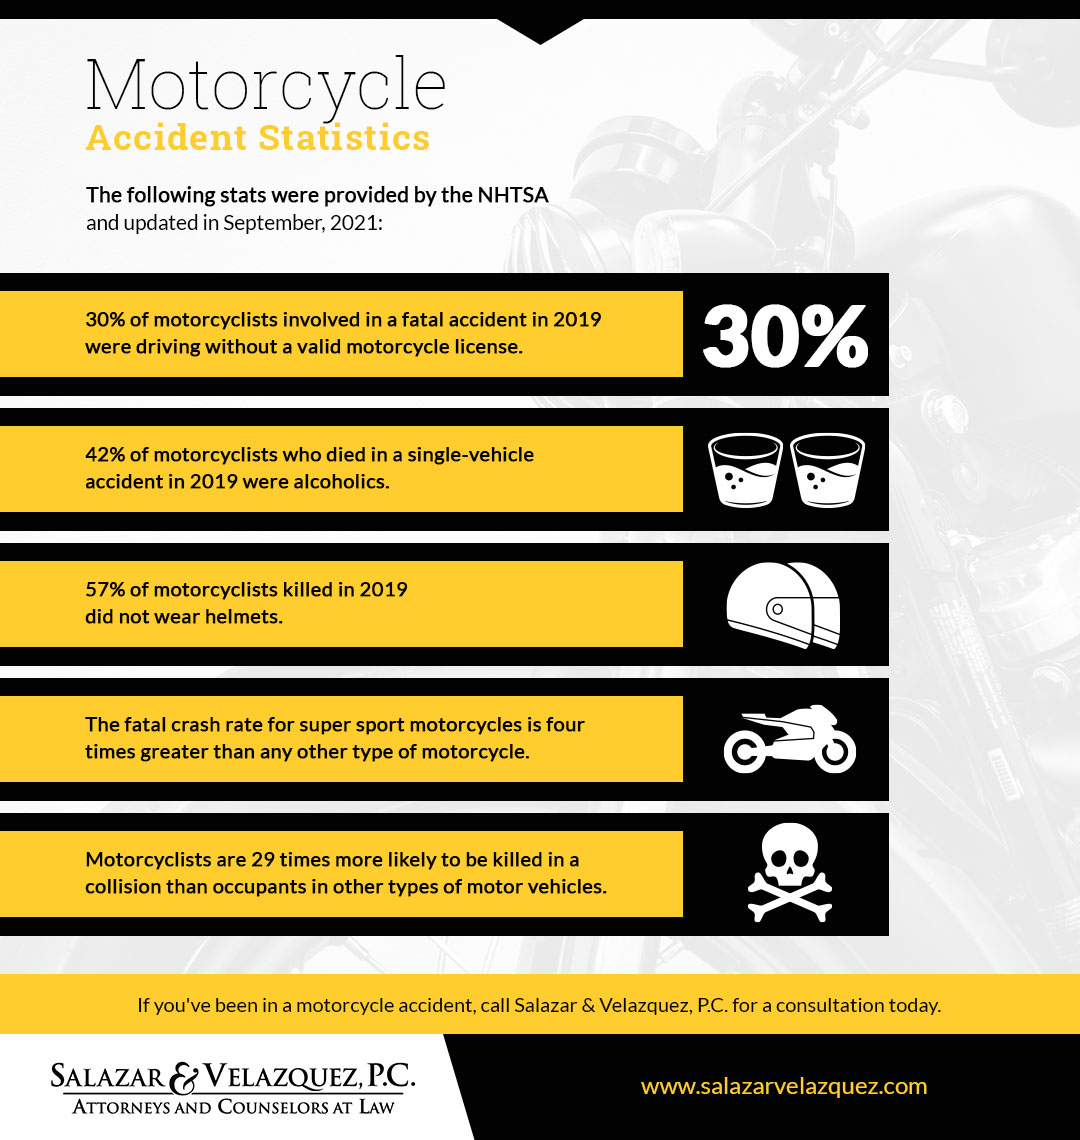 IG - Motorcycle Accident Statistics